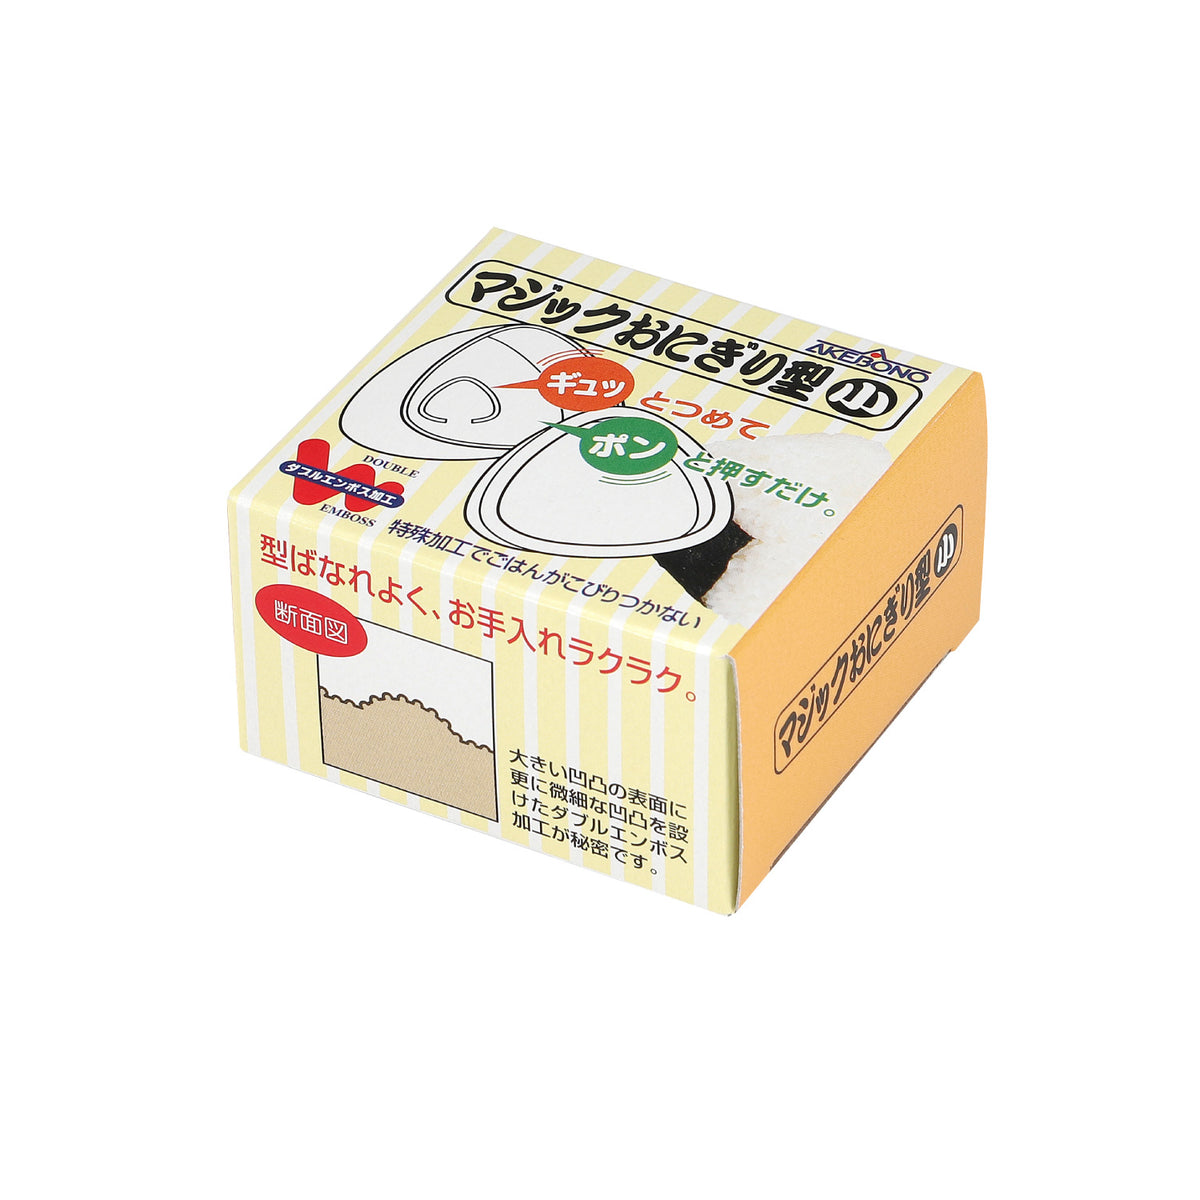 Akebono Polypropylene Onigiri Rice Ball Mold